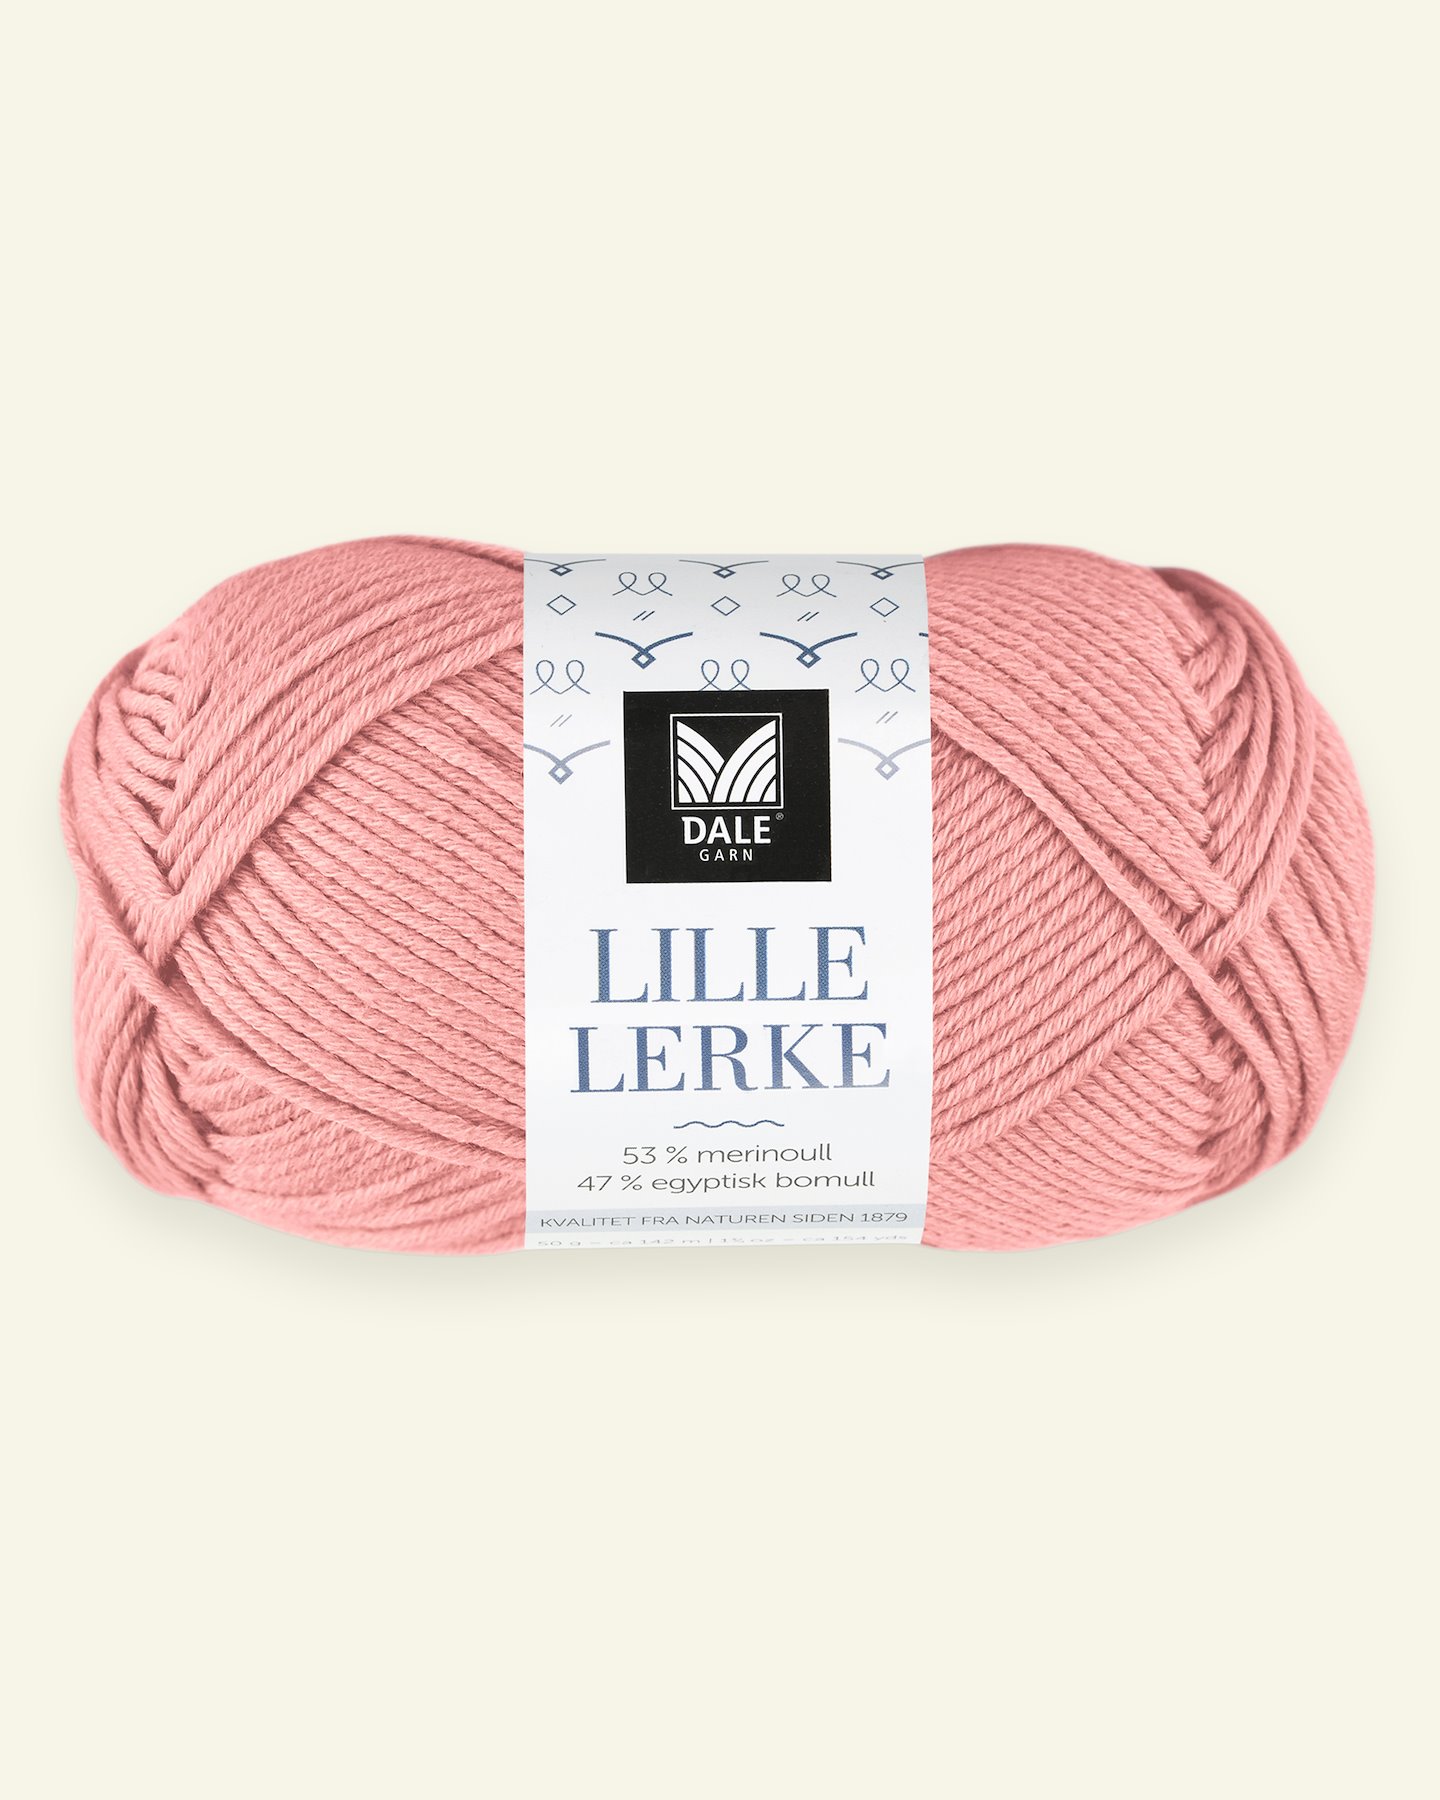 Dale Garn, merino/cotton yarn "Lille Lerke", light coral (8136) 90000417_pack